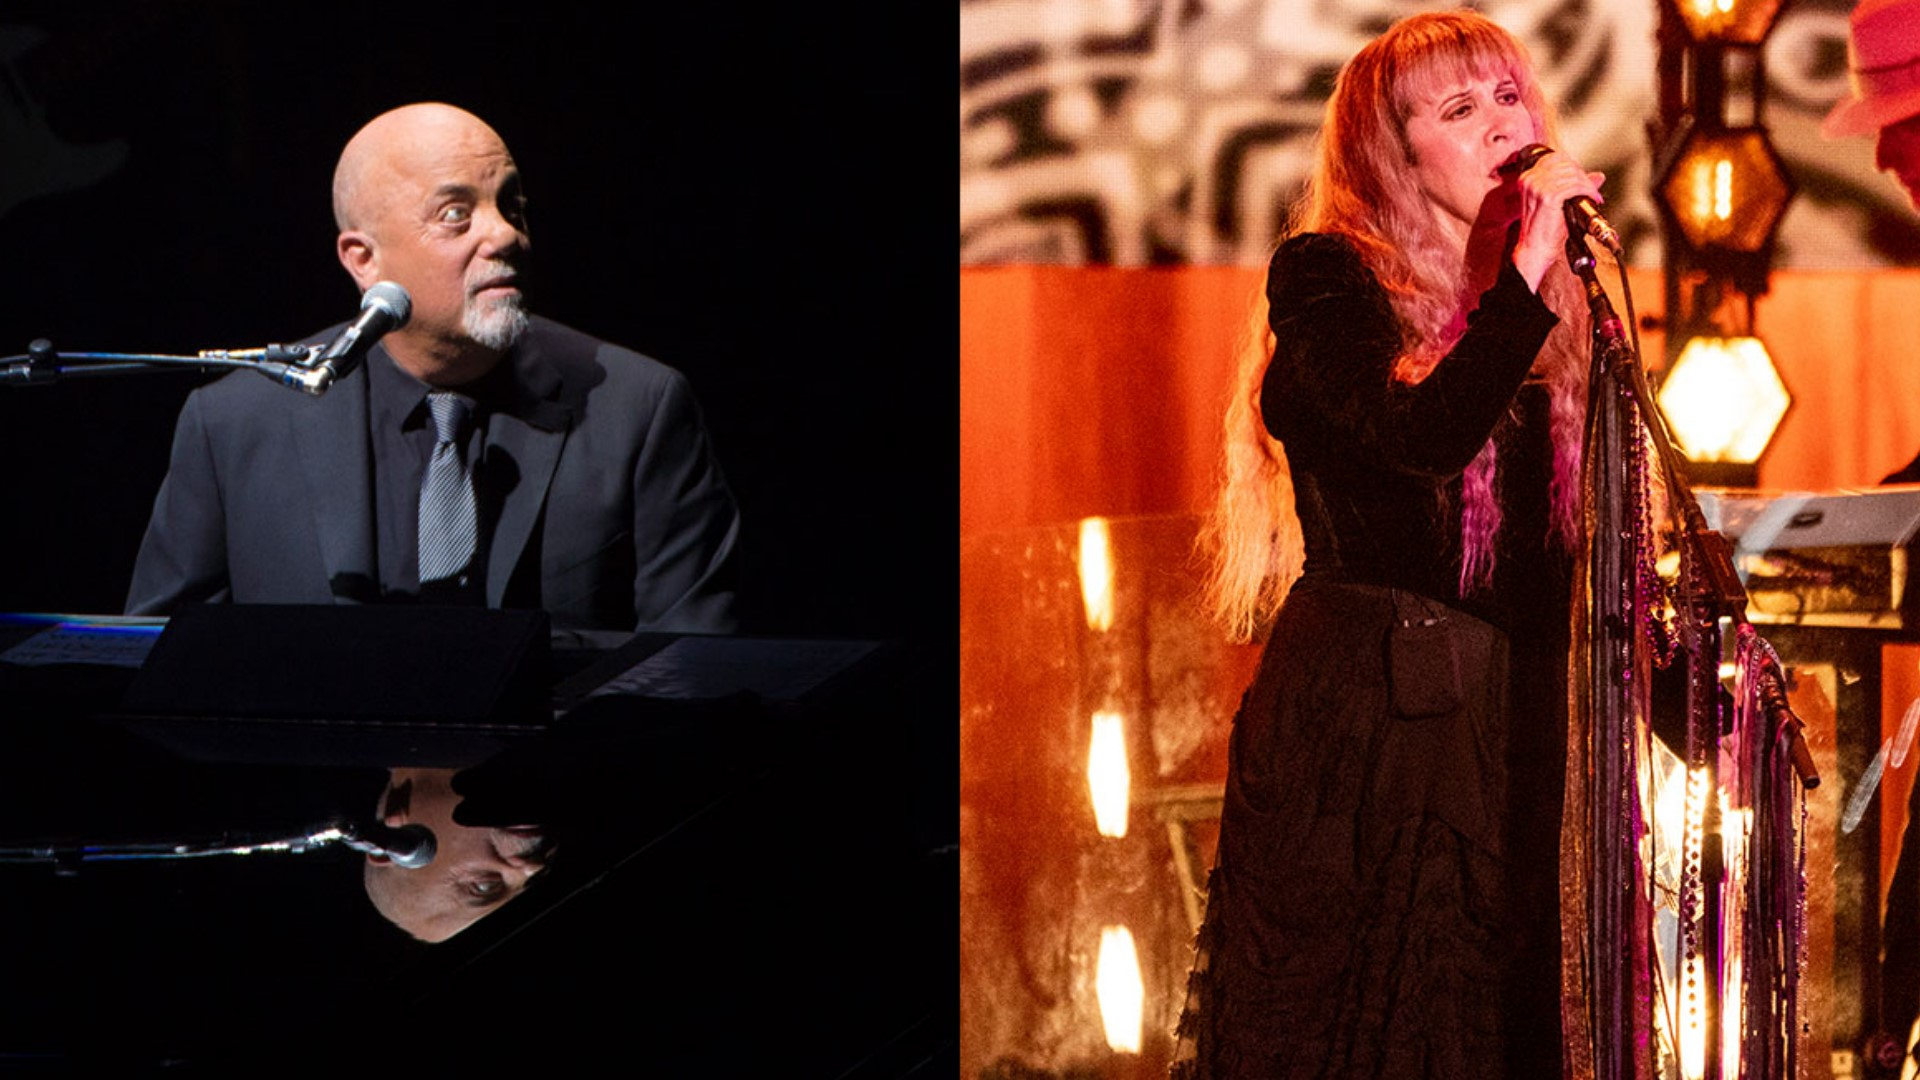 Billy Joel and Stevie Nicks will play at Ohio Stadium on Aug. 5, 2023.